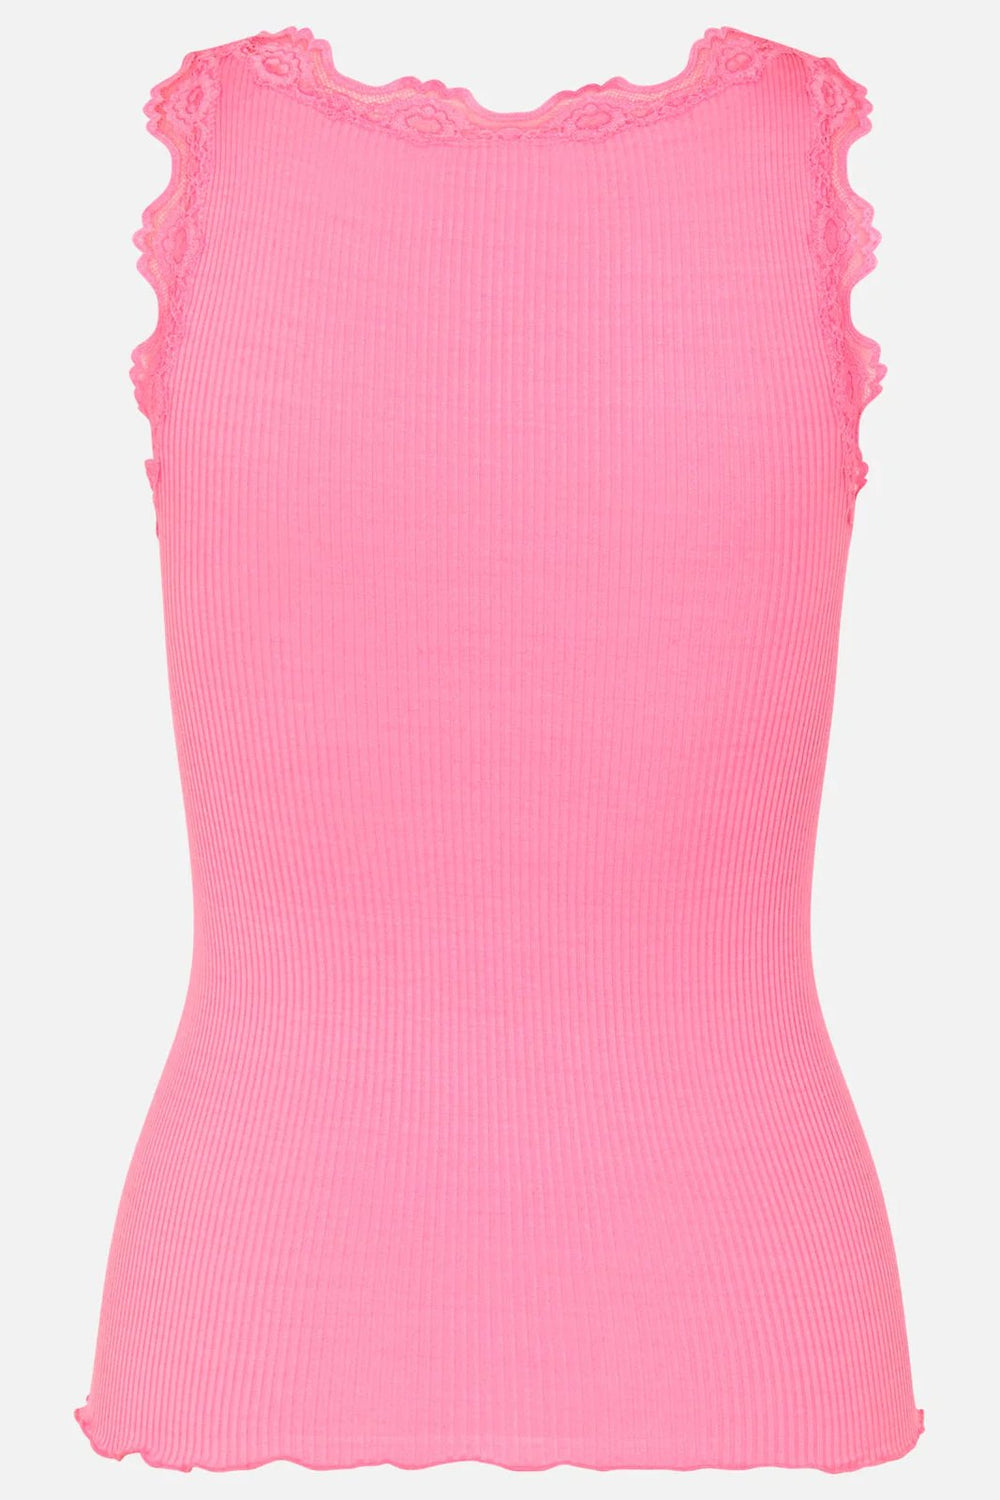 Rosemunde | Silketop | Tanktop med blonder, 5205 dolly pink